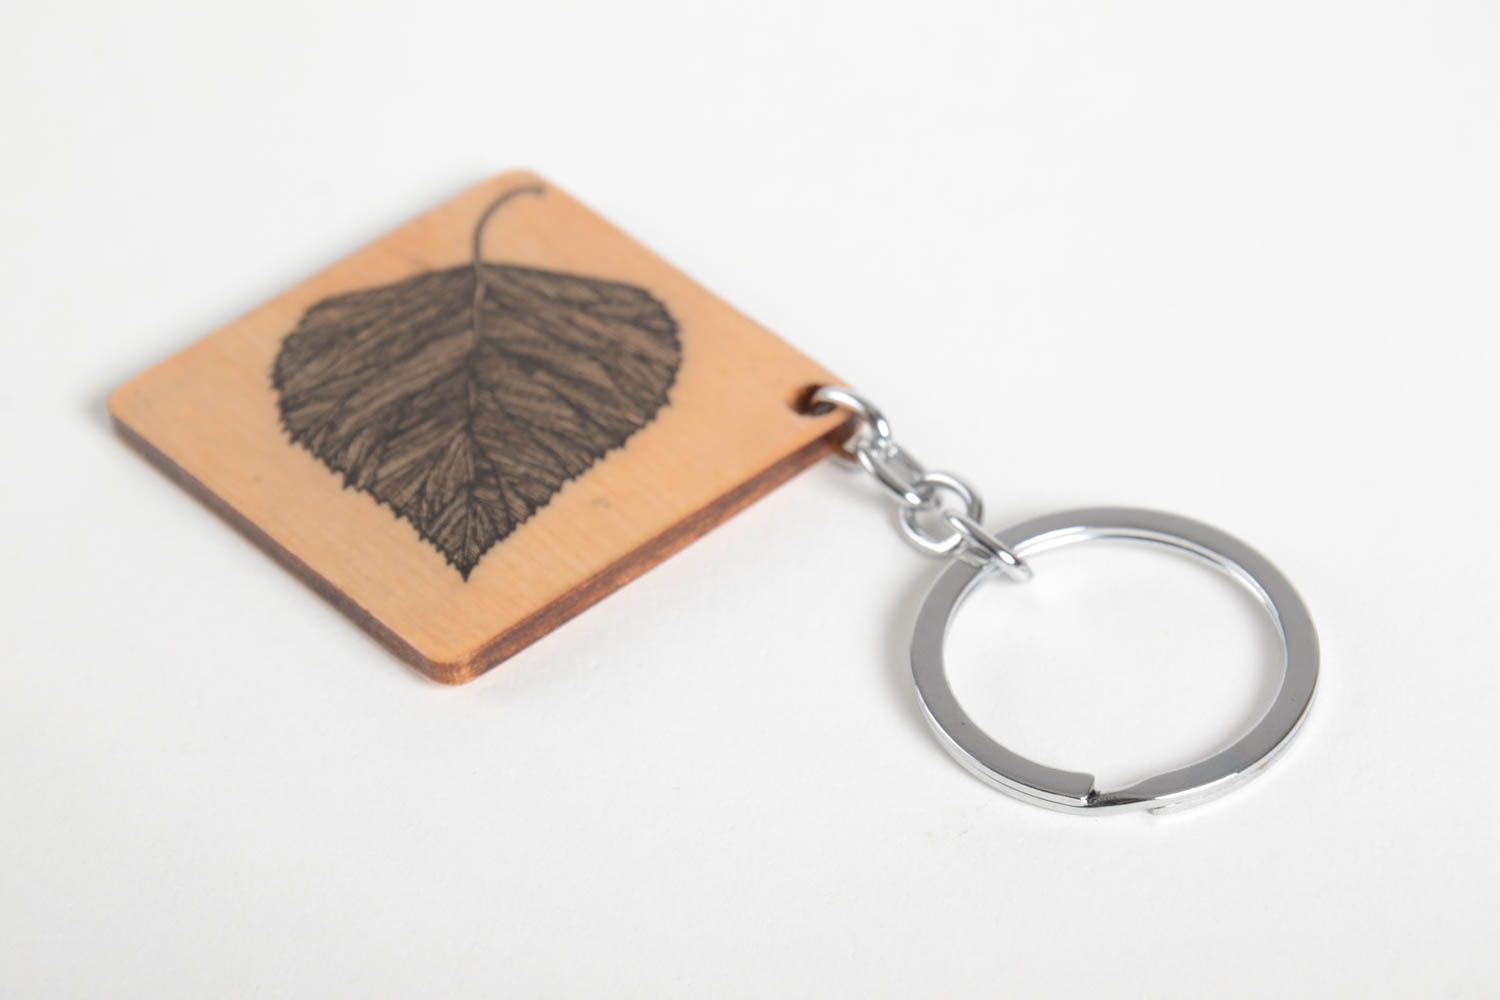 Handmade keychain unusual accessory gift ideas wooden souvenir handmade gift photo 4